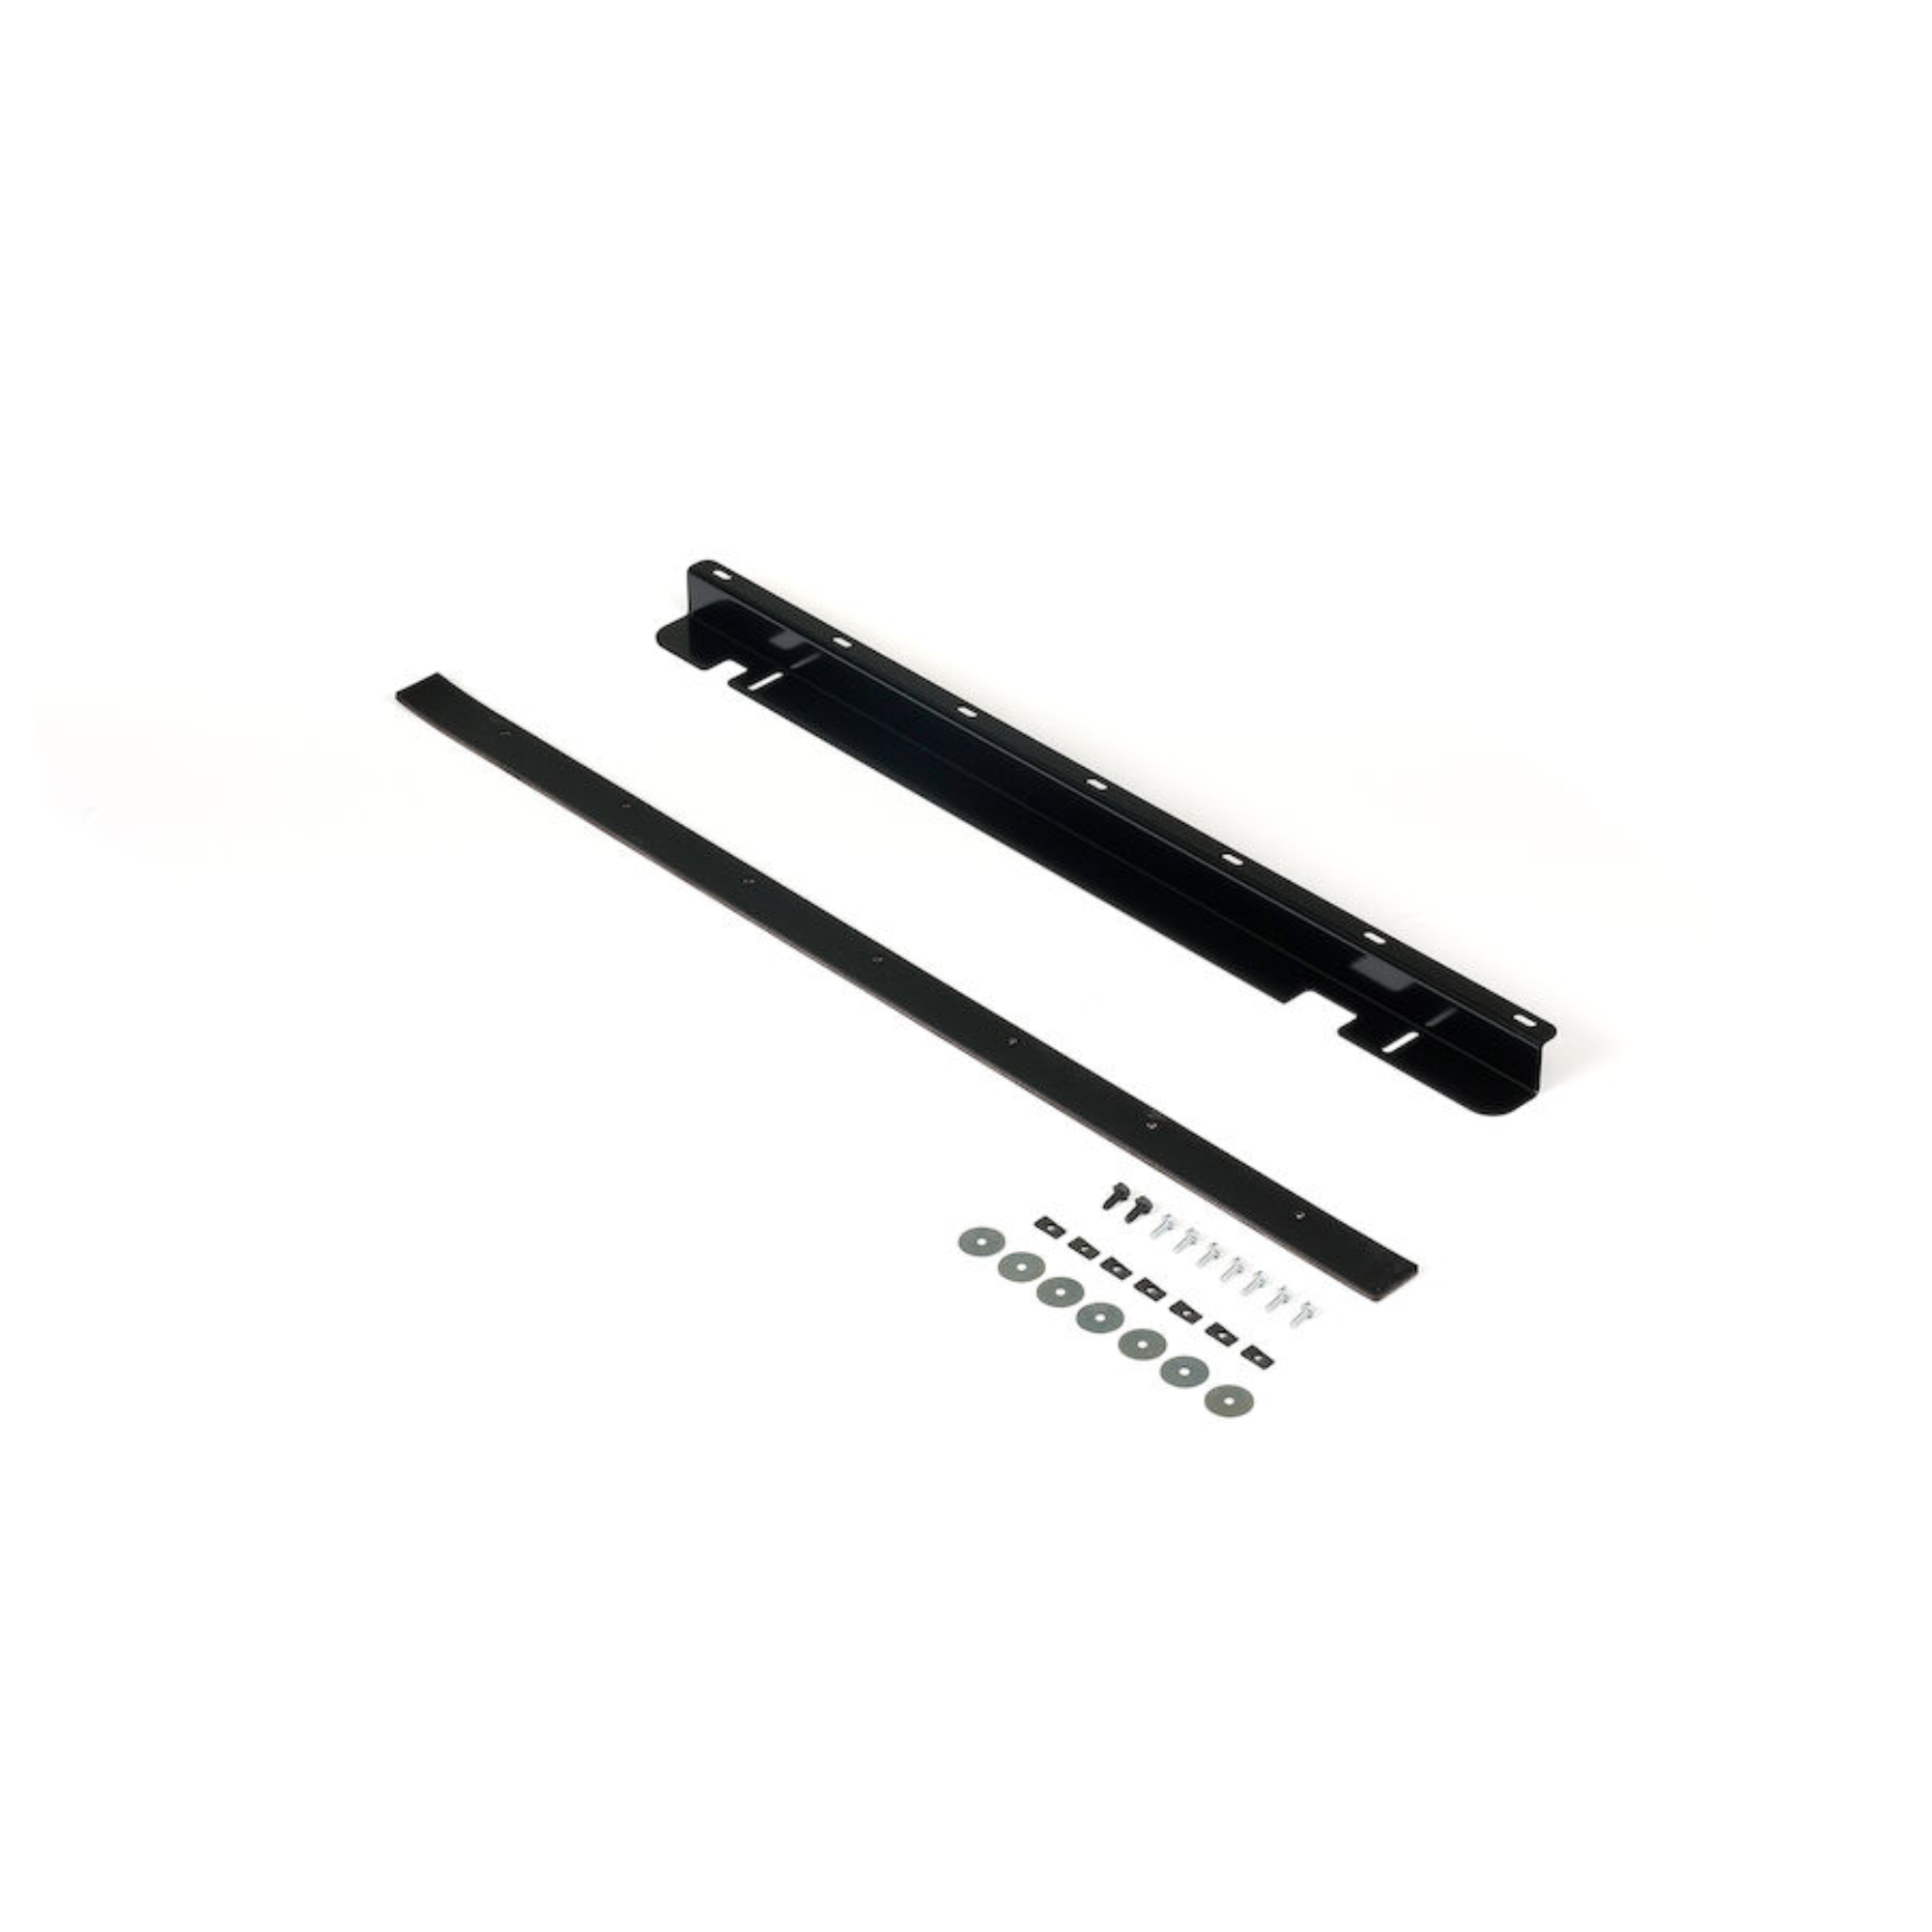 Toro 48 inch TimeCutter Stripping Kit | 140-5119